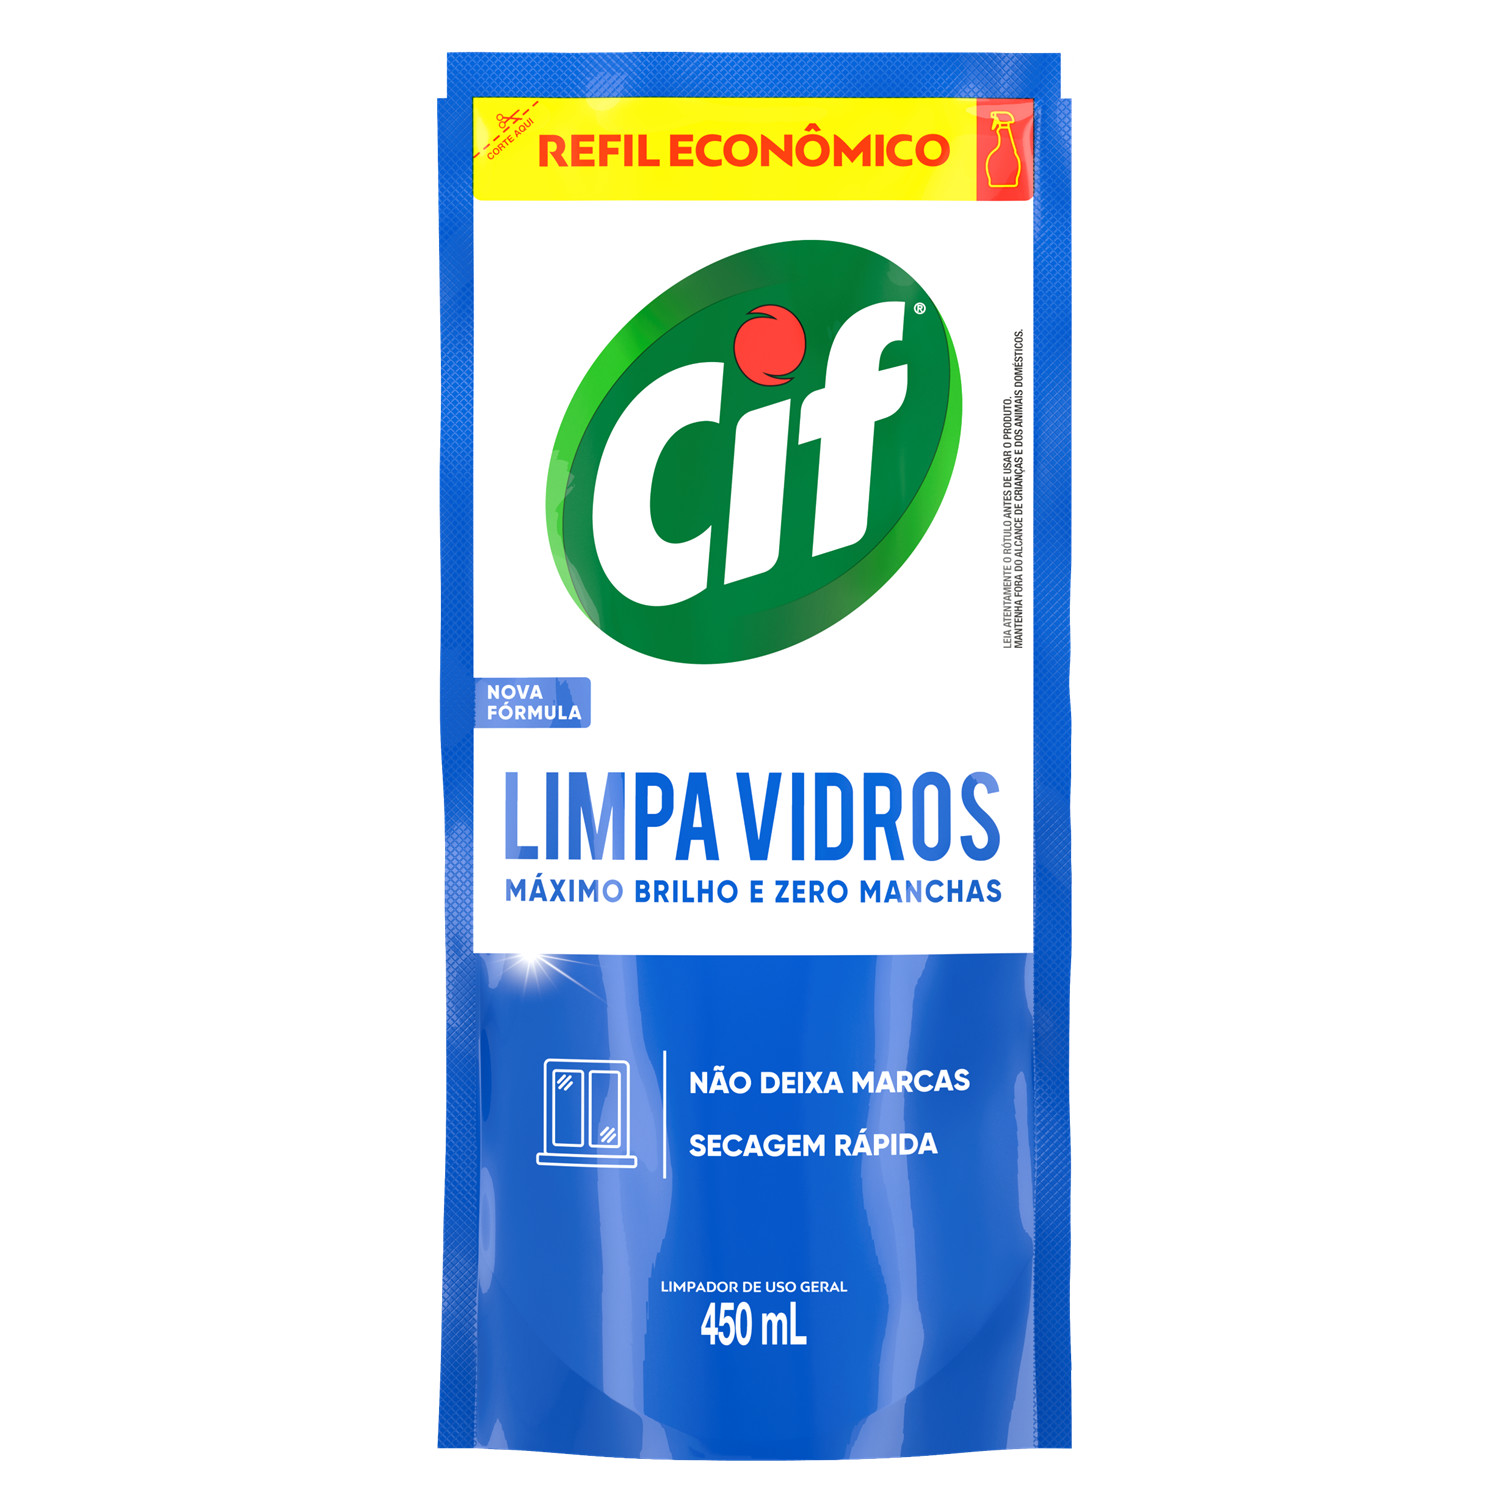 CIF Limpa Vidros Refil Econômico productos